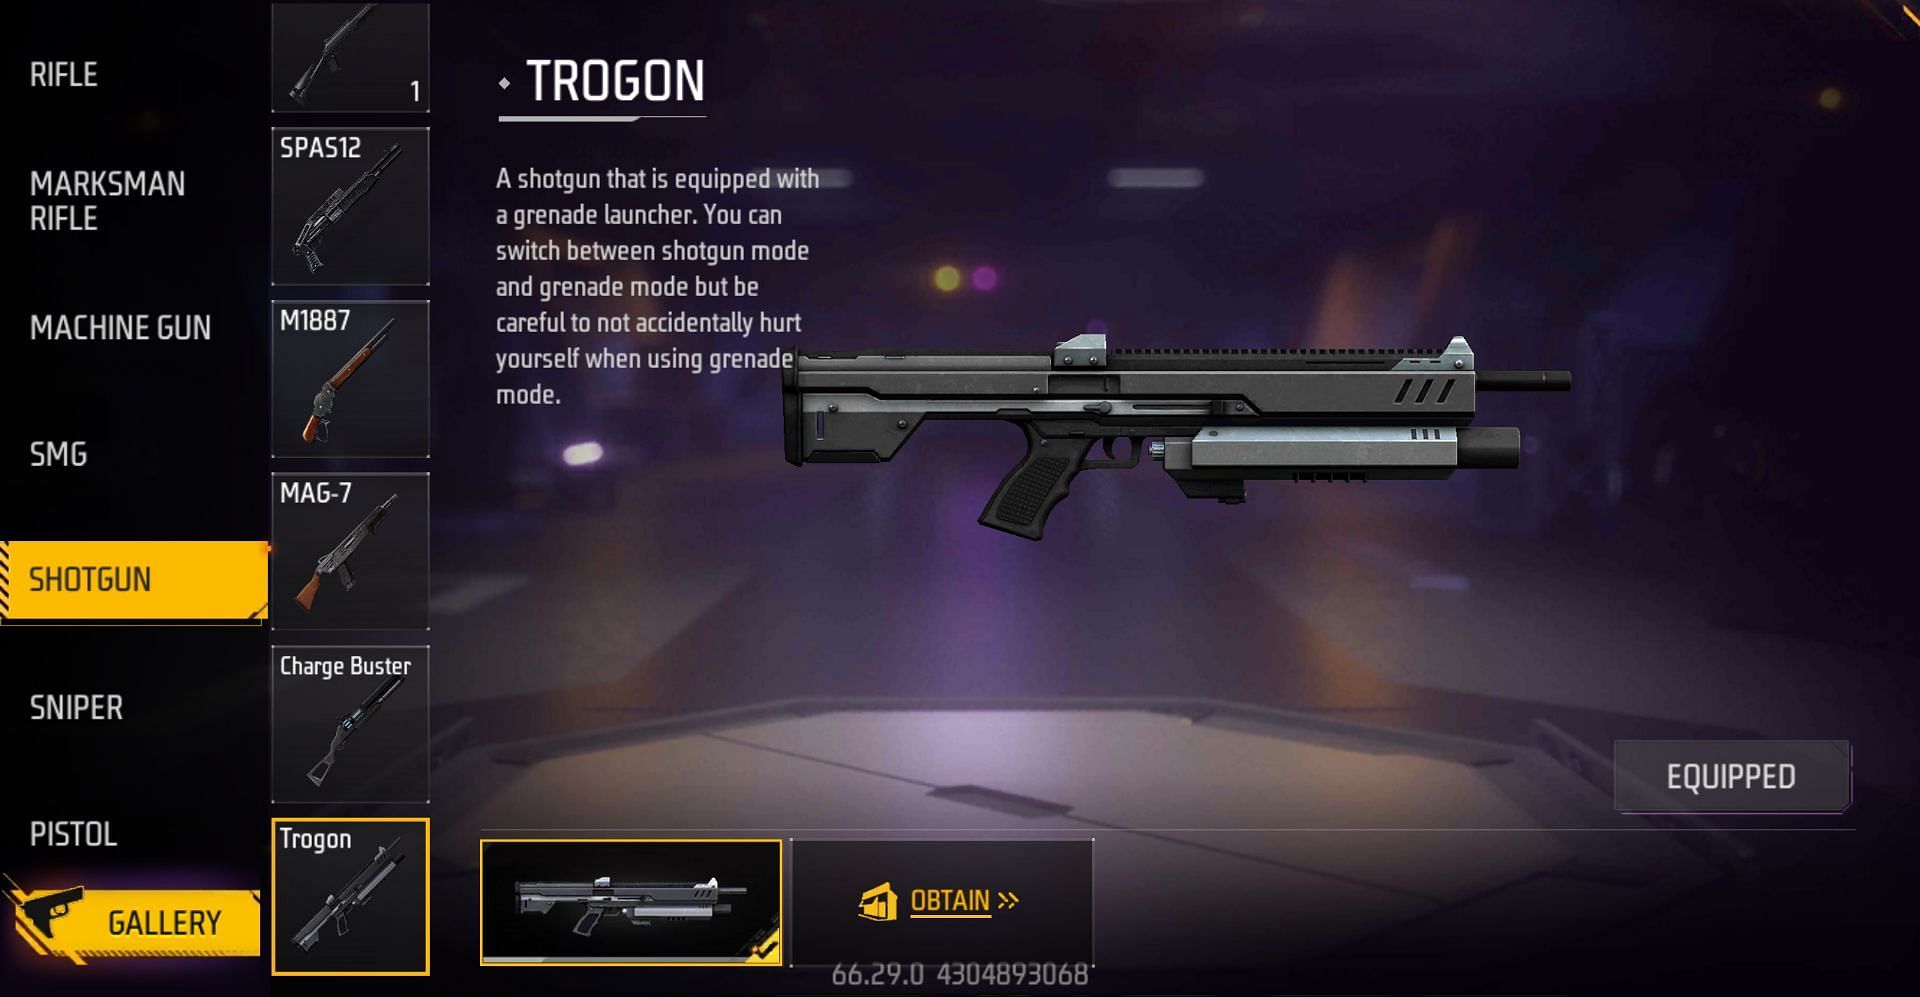 Trogon features two firing modes (Image via Garena)